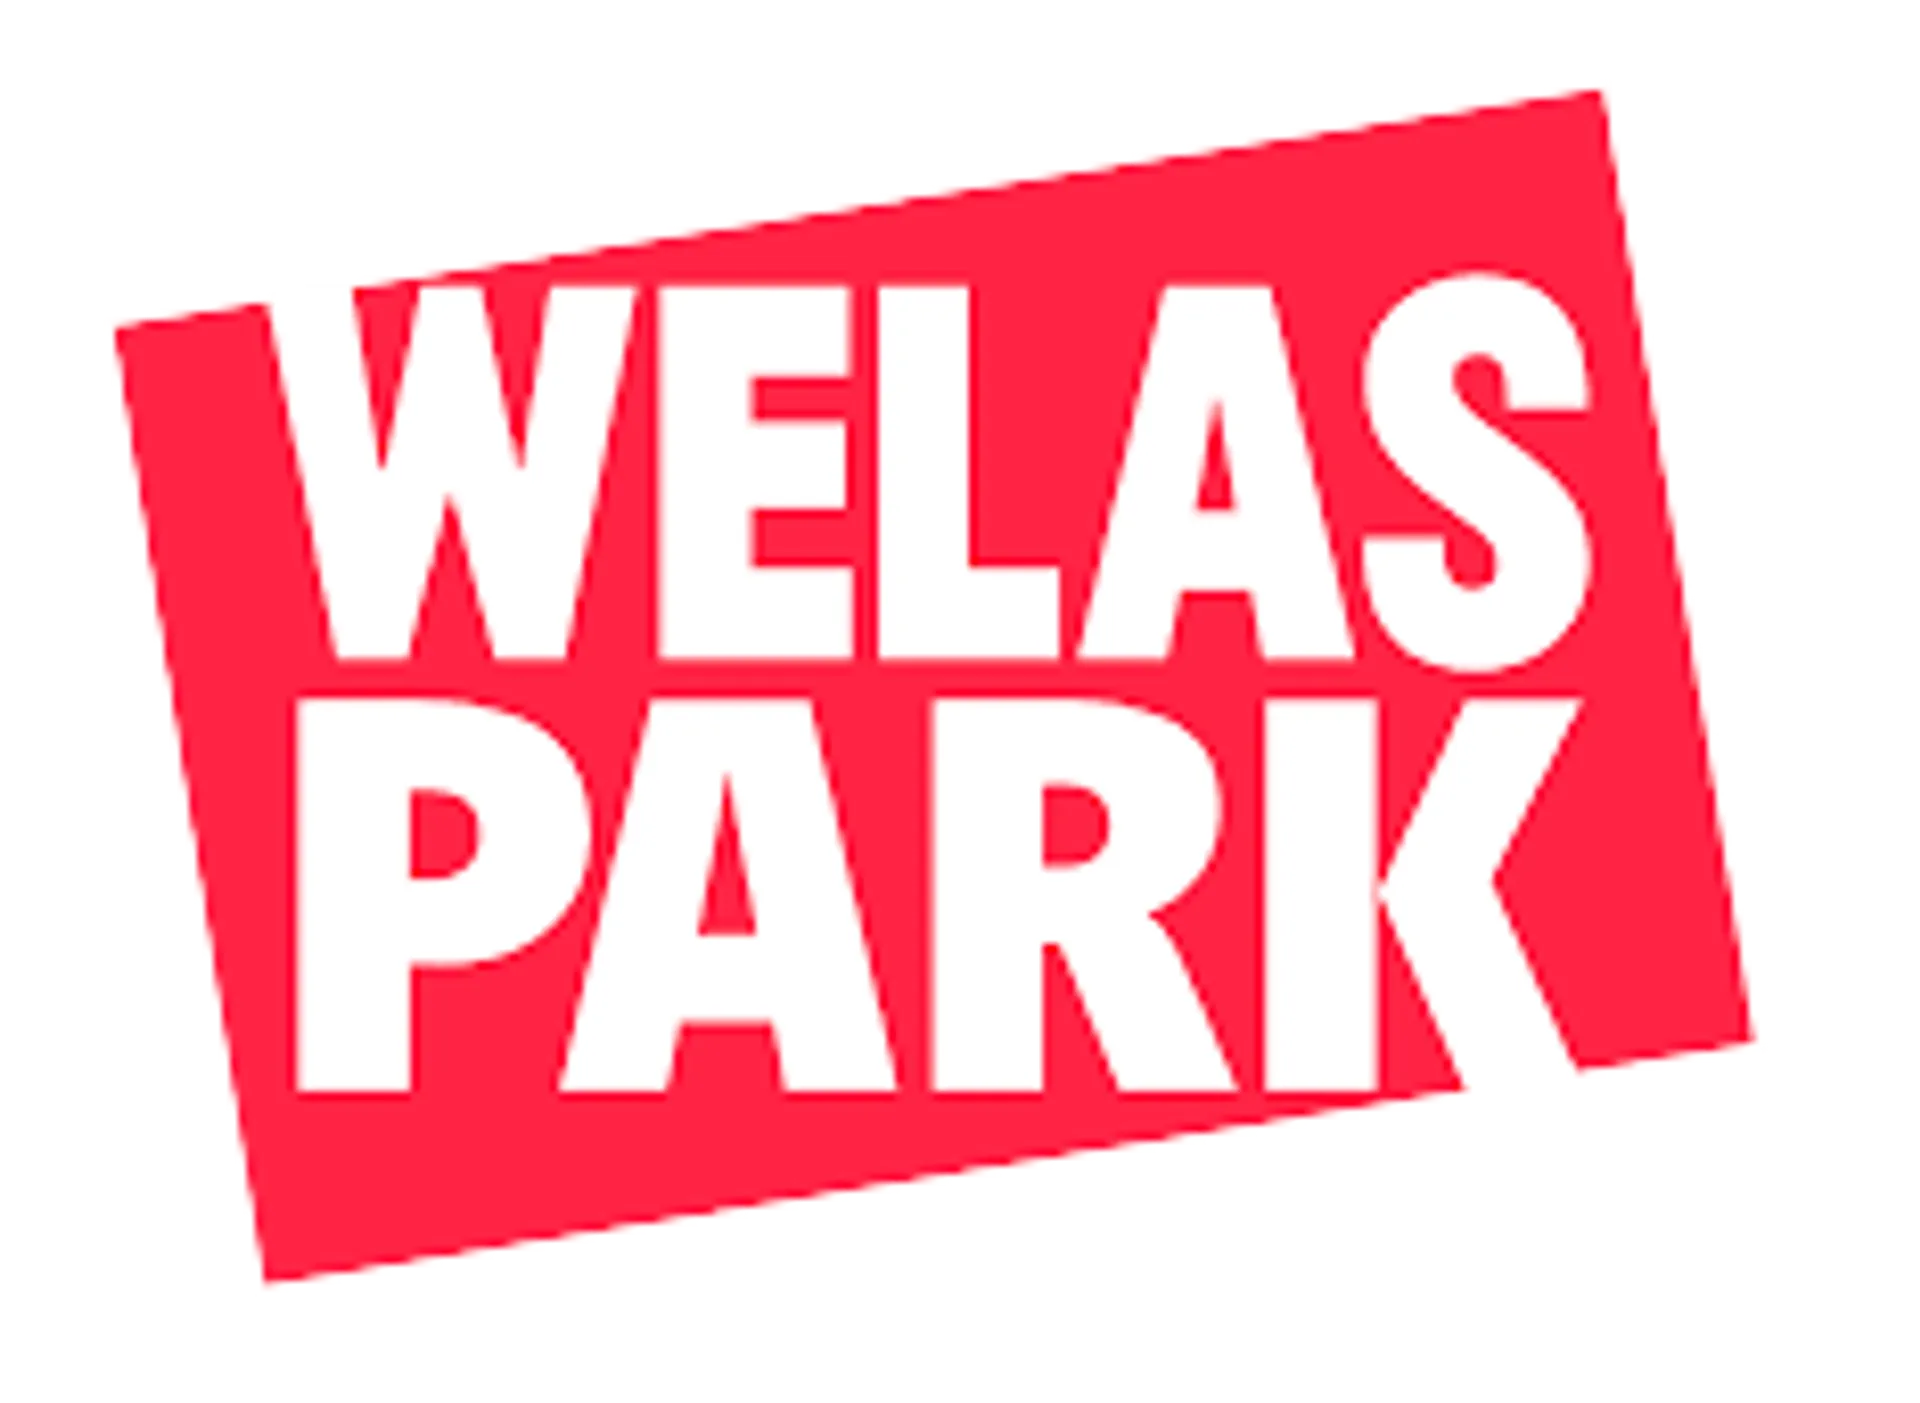 WELAS PARK logo die aktuell Flugblatt